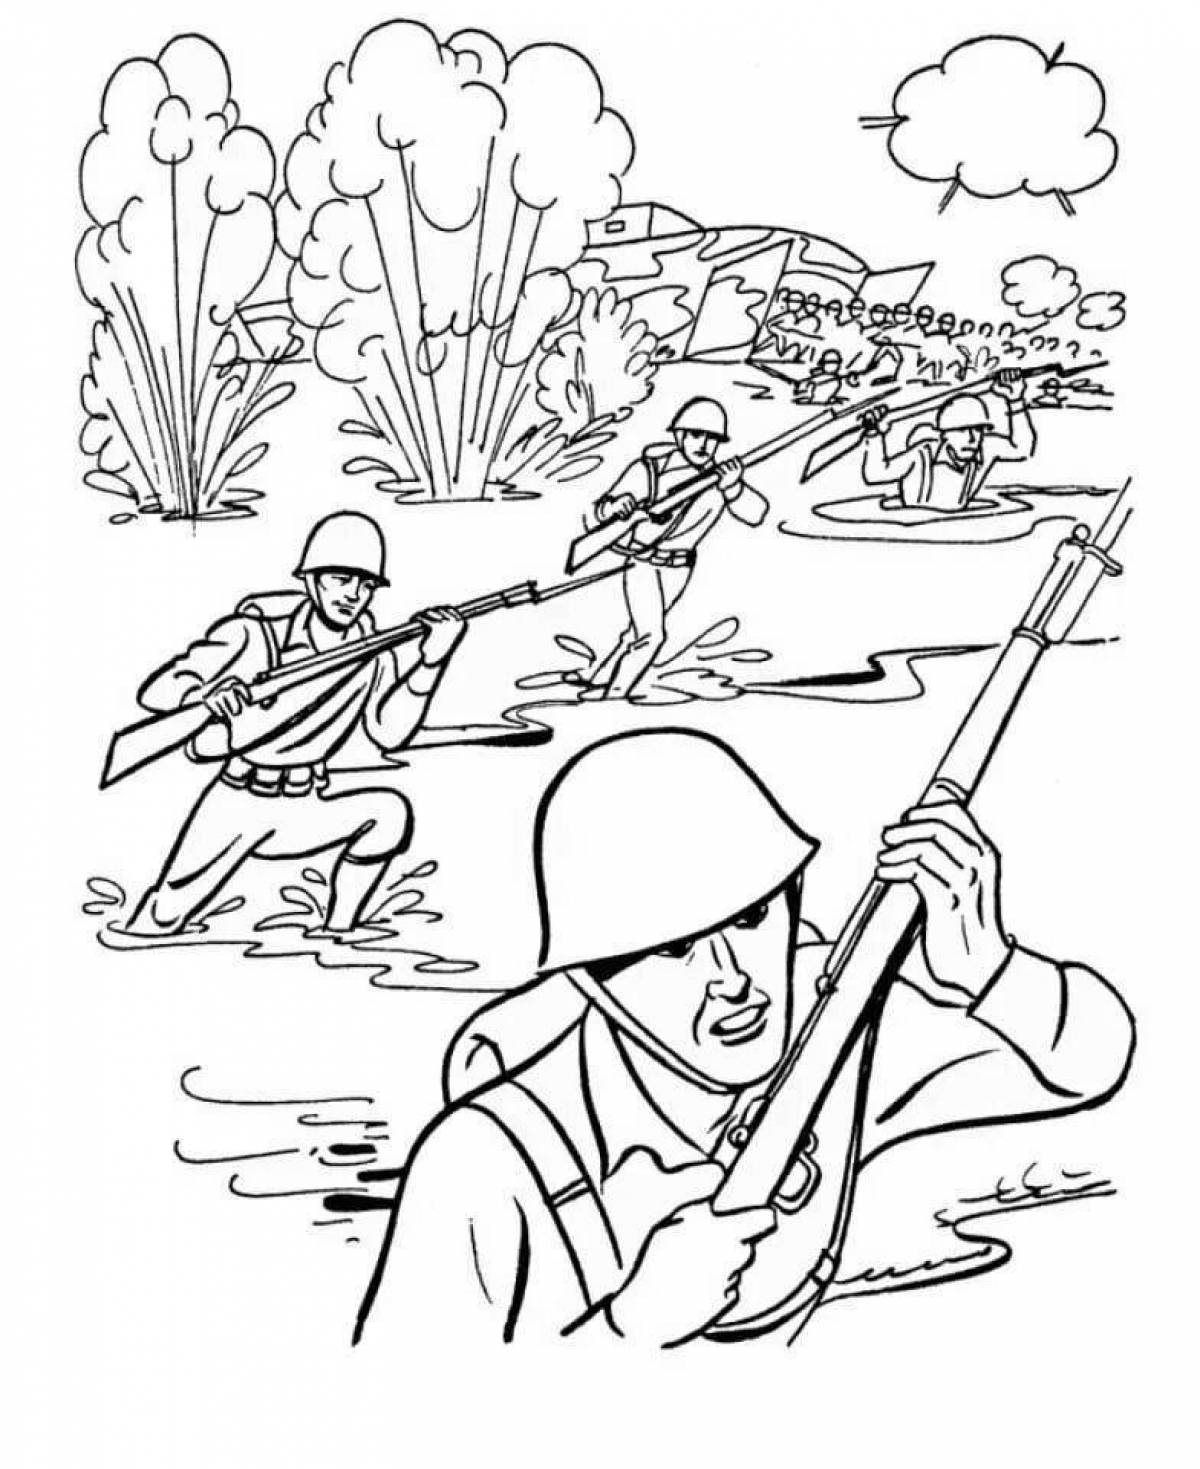 Impressive coloring of the battle of Stalingrad grade 4